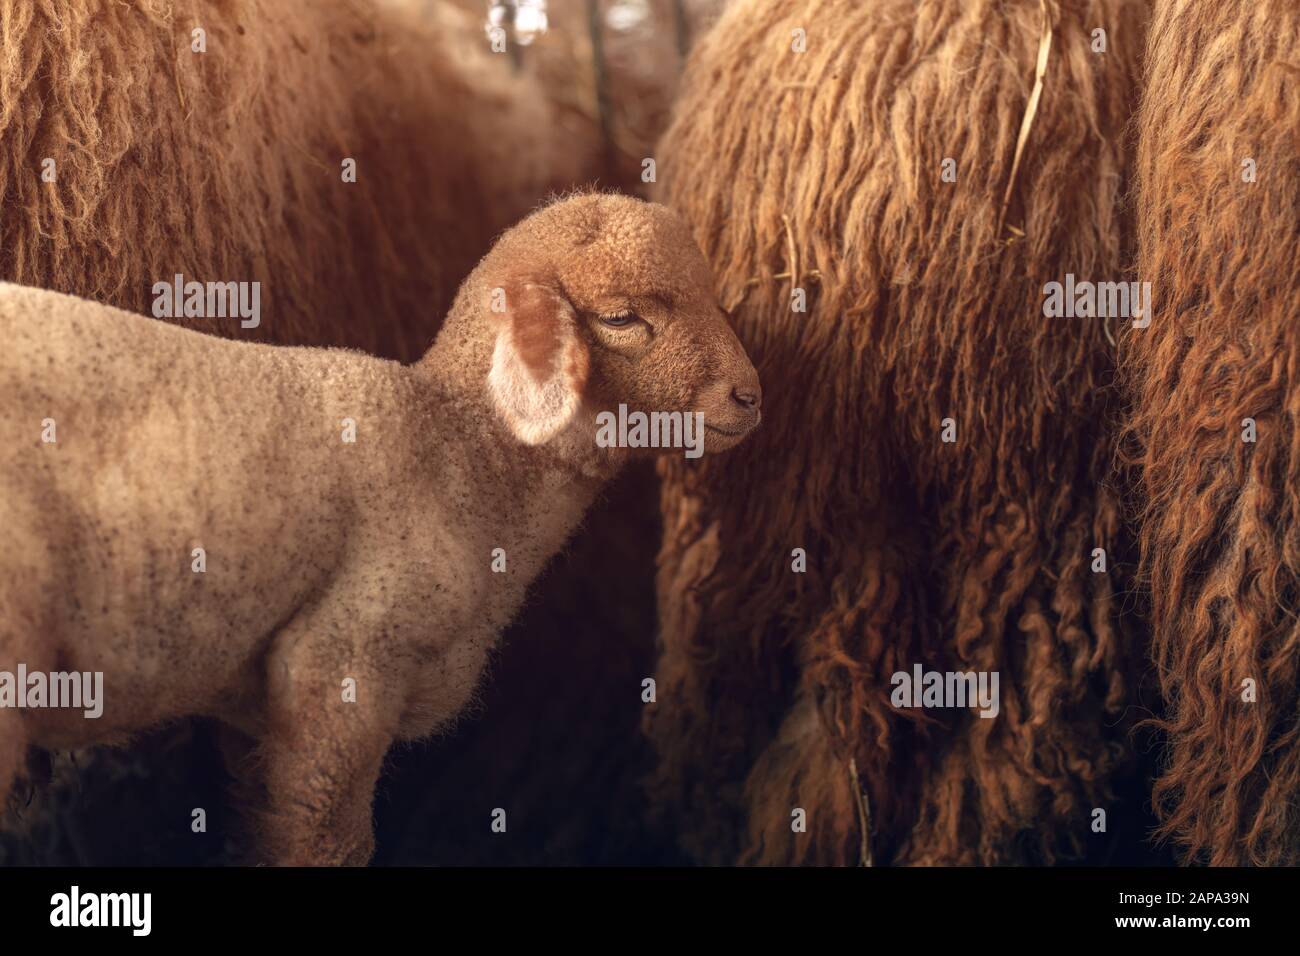 Lamb and sheep in pen on livestock farm, domestic animals husbandry Stock Photo